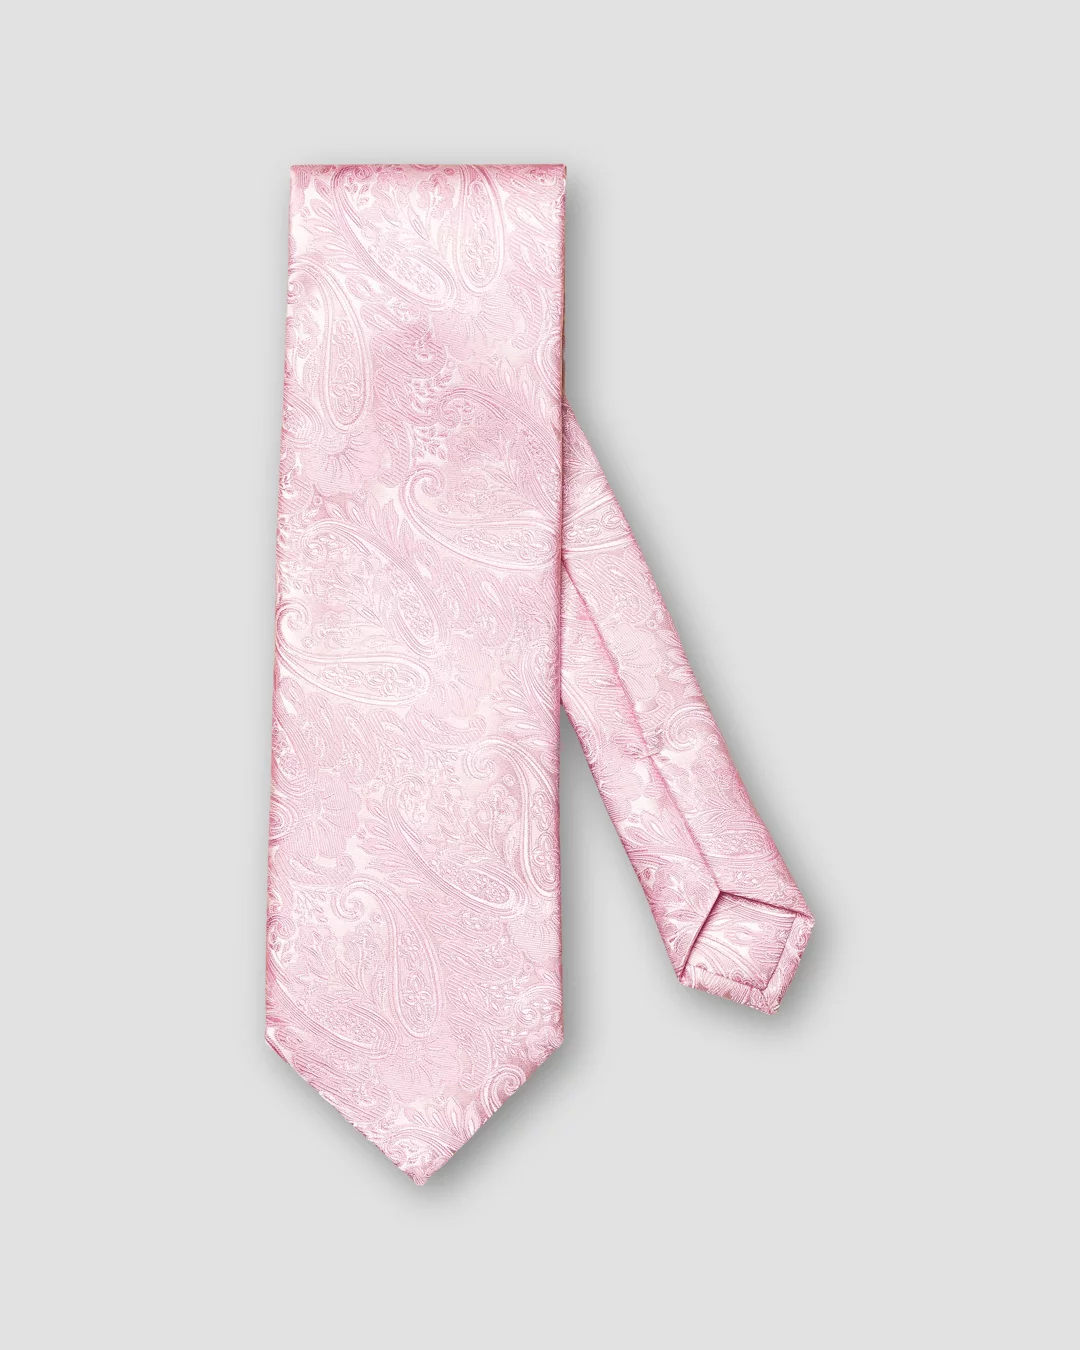 Plastron in antique pink micro jacquard silk